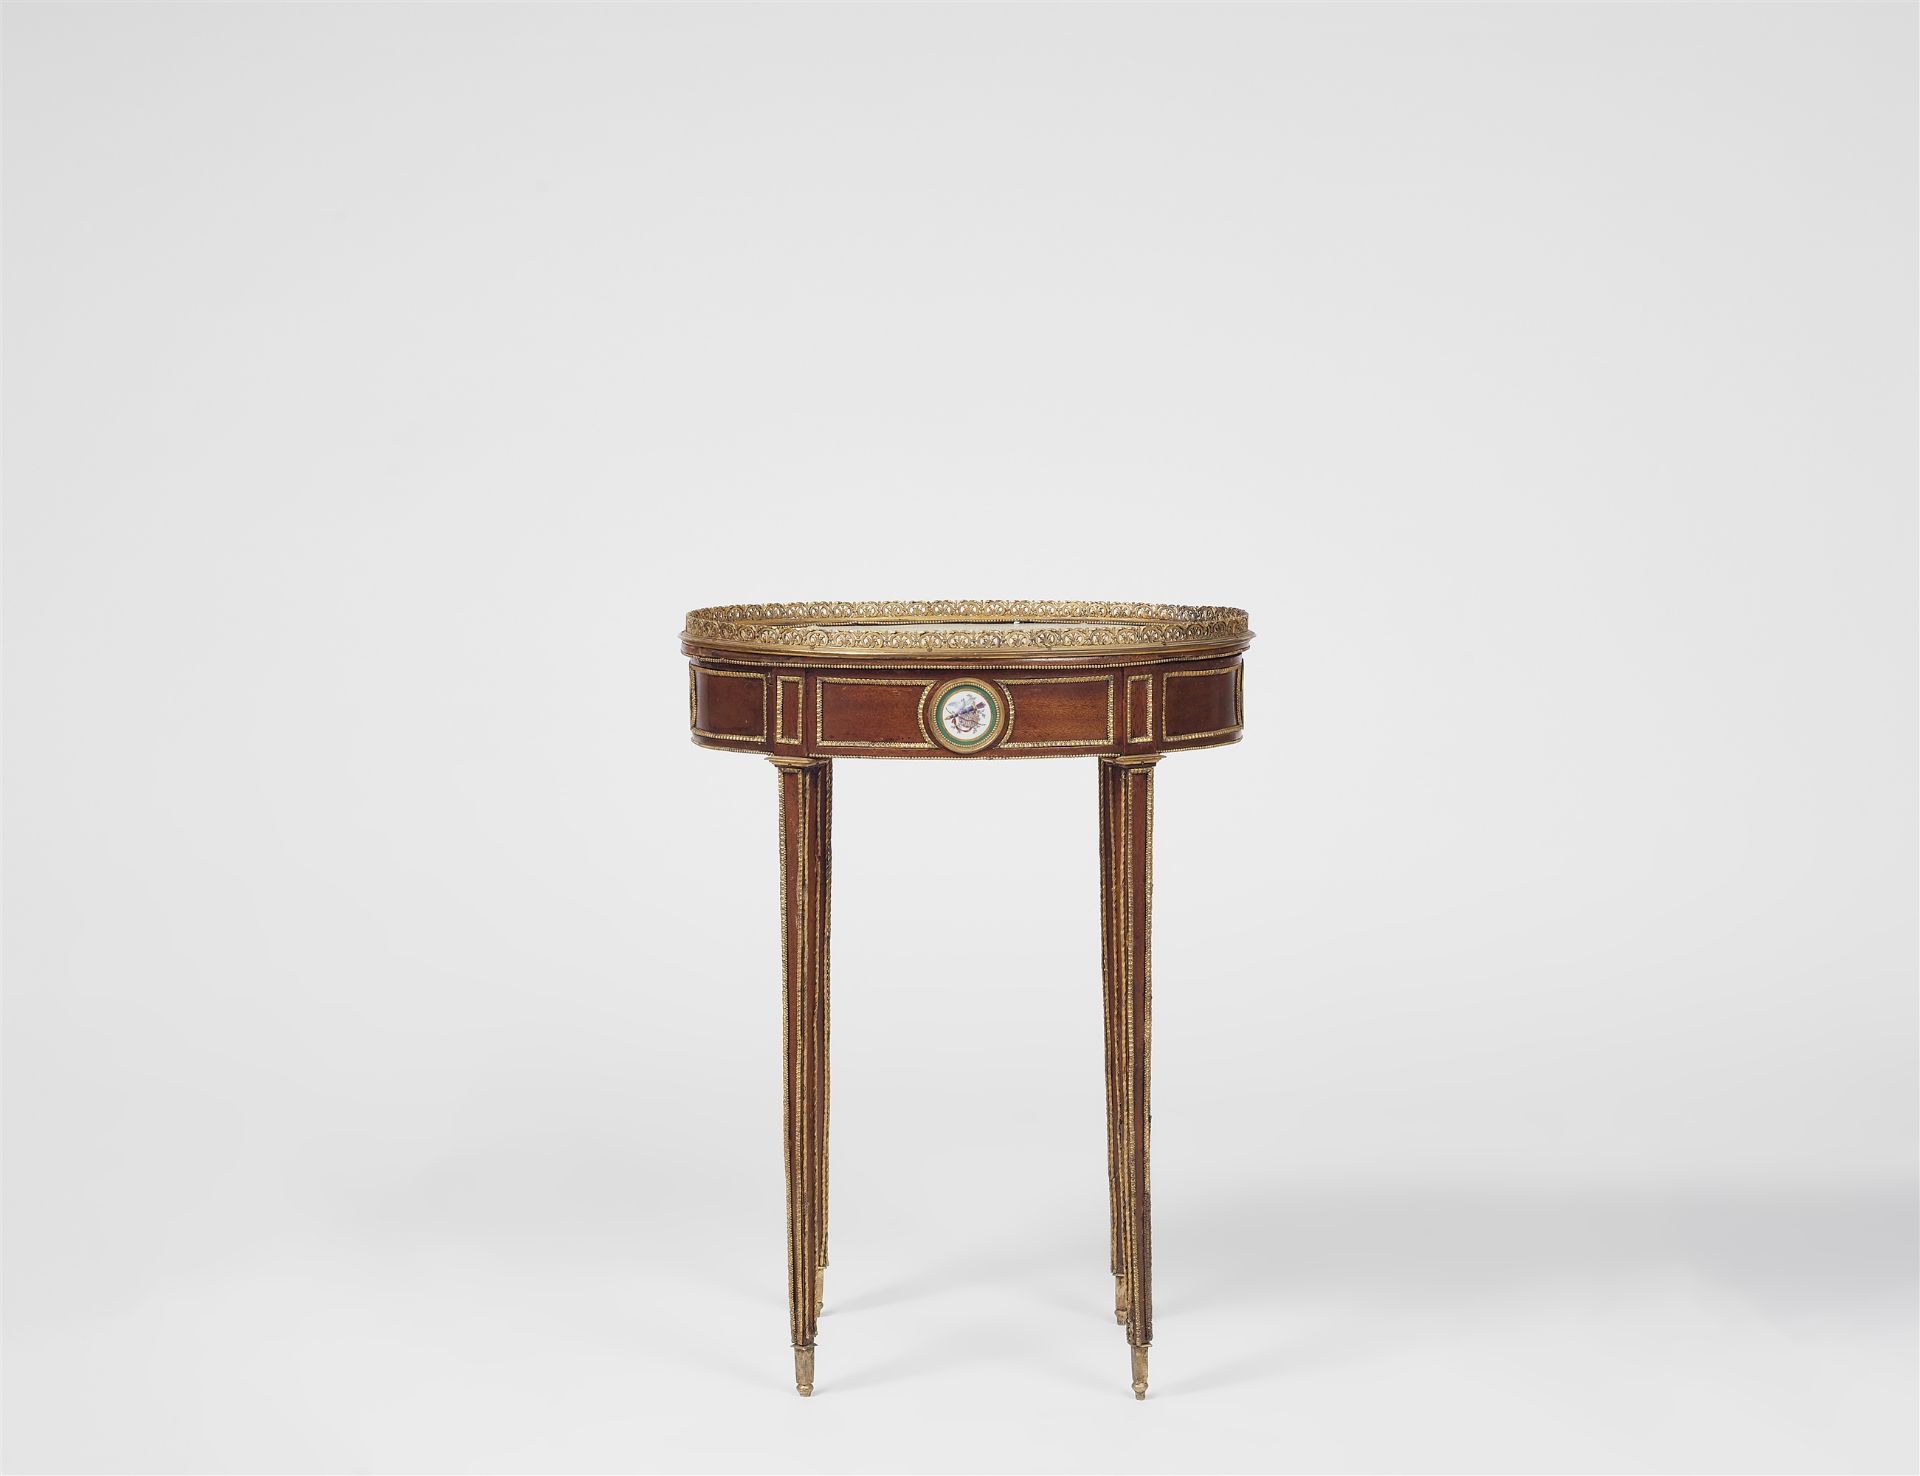 A Louis XVI style table